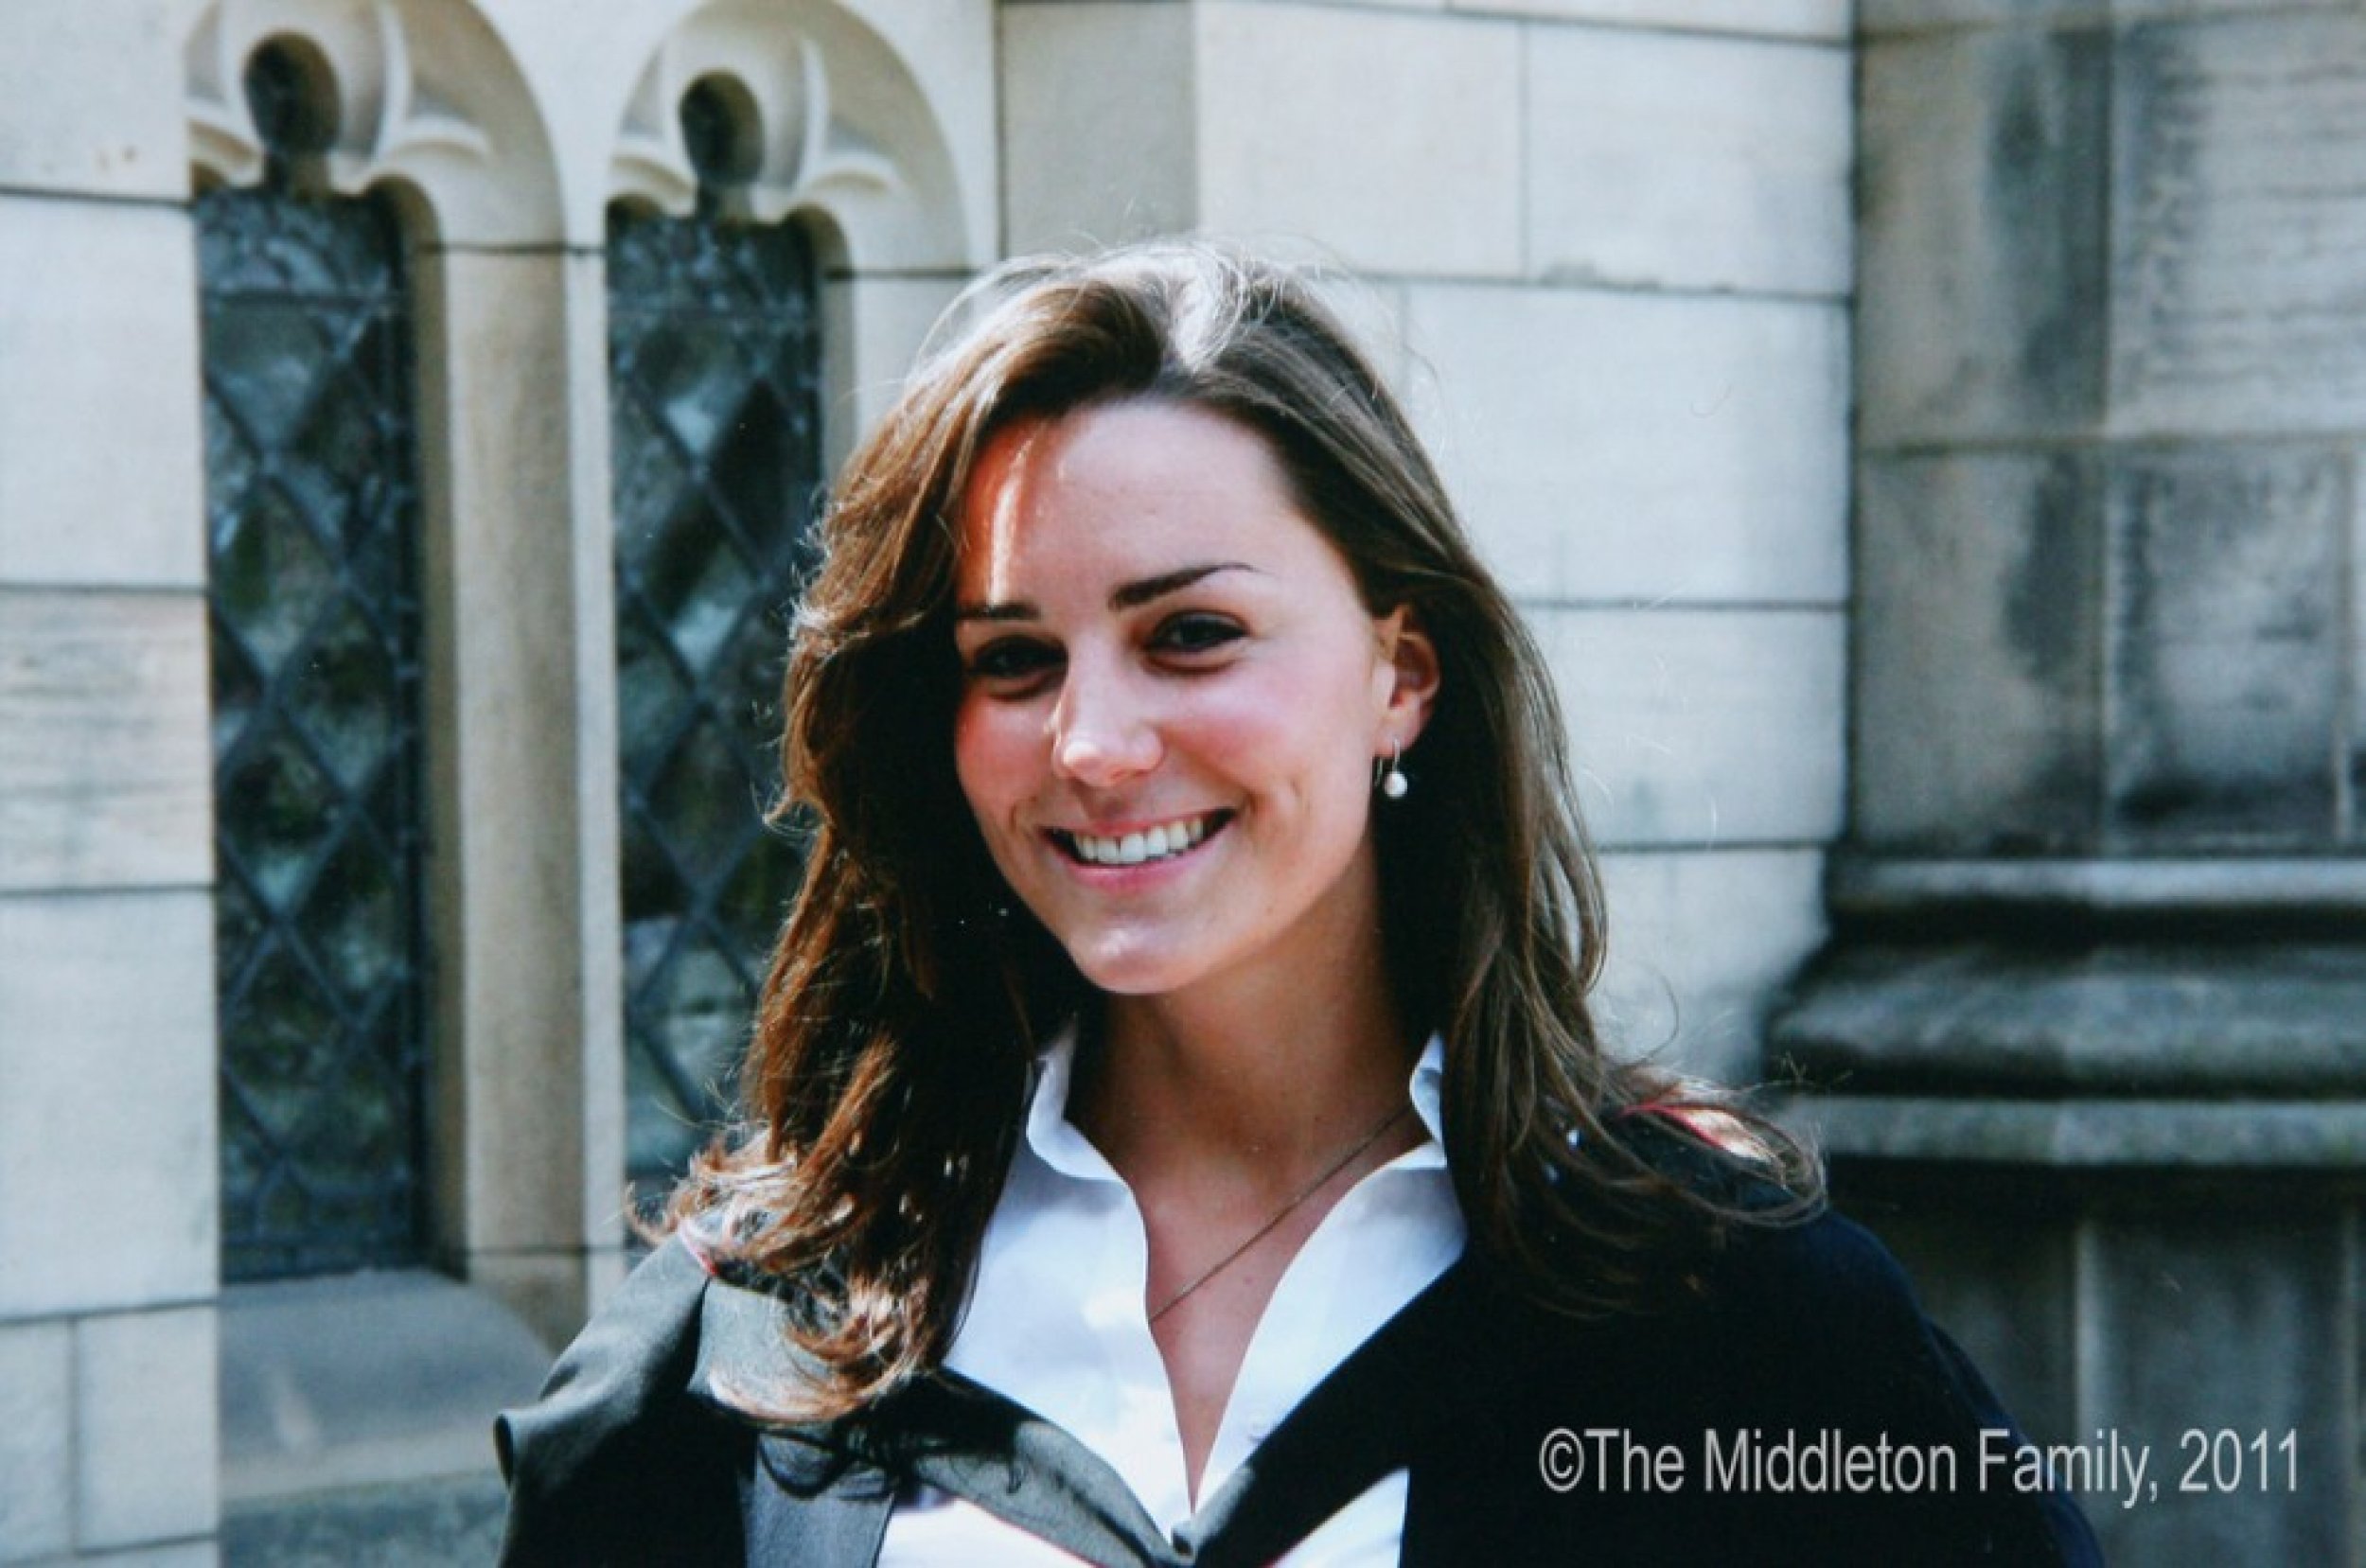 Kate Catherine Middleton on her graduation day, St. Andrews University.